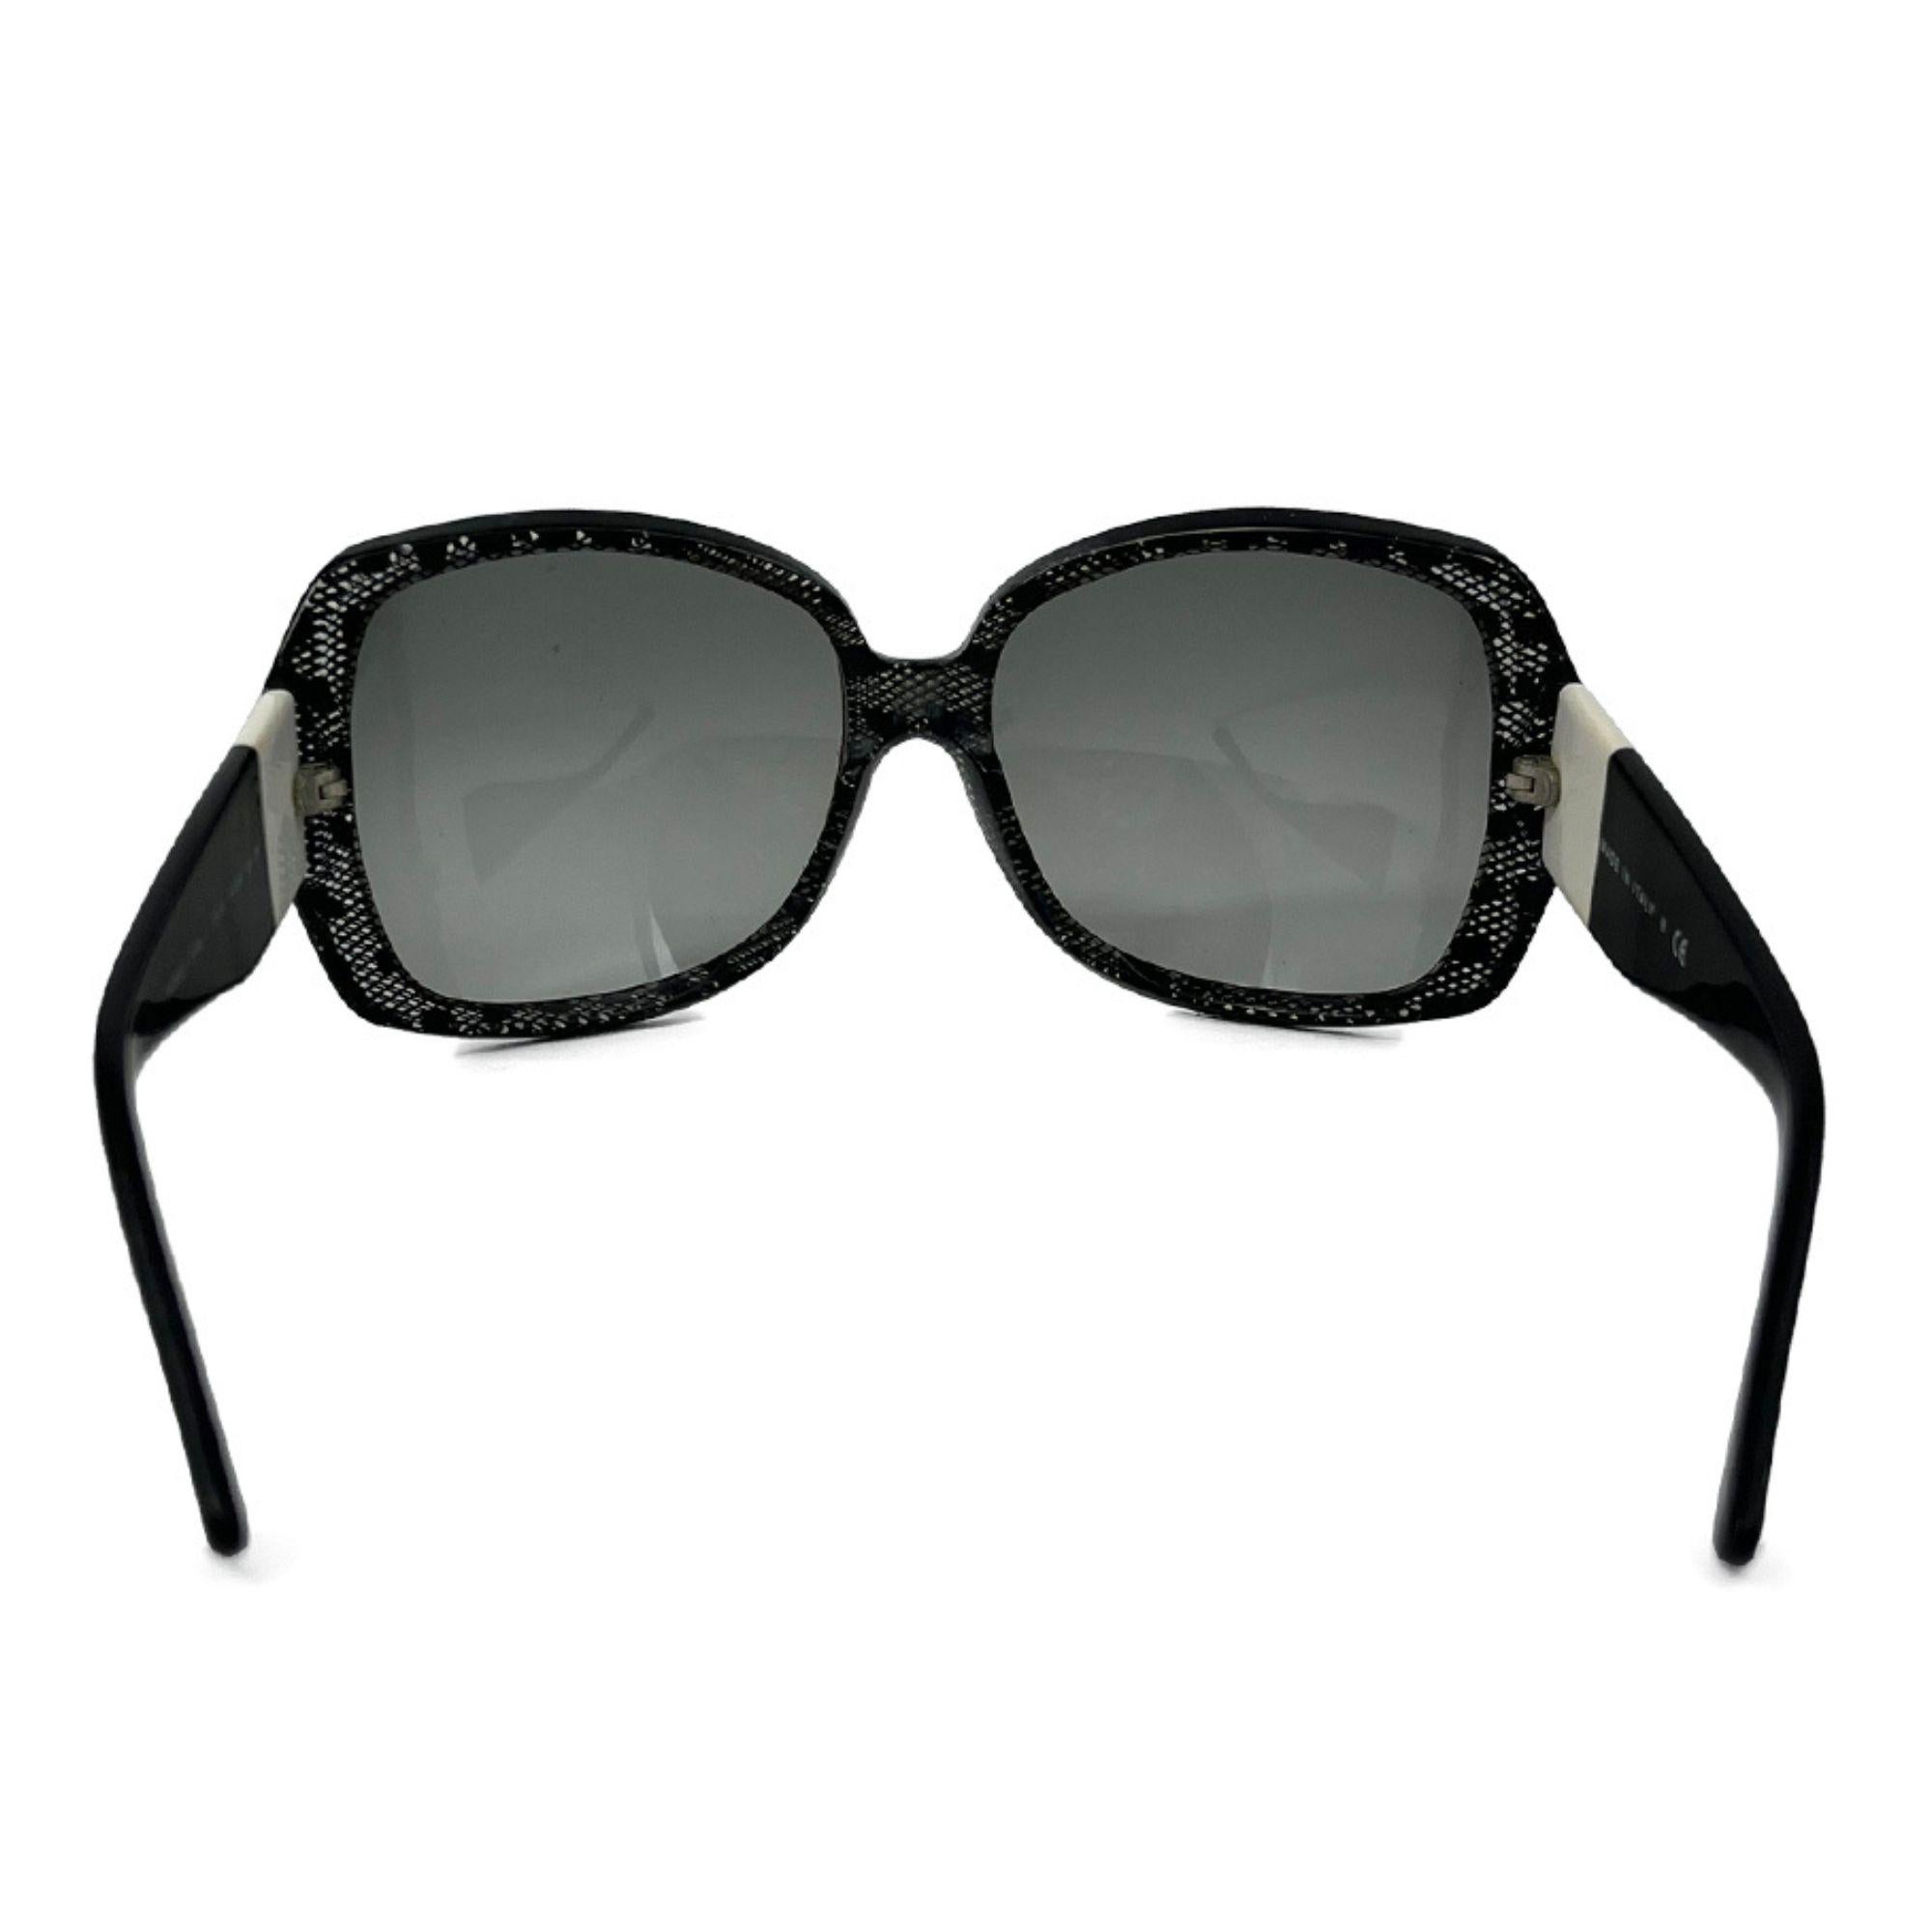 Chanel Black Lace CC Sunglasses In Good Condition For Sale In Amman, JO